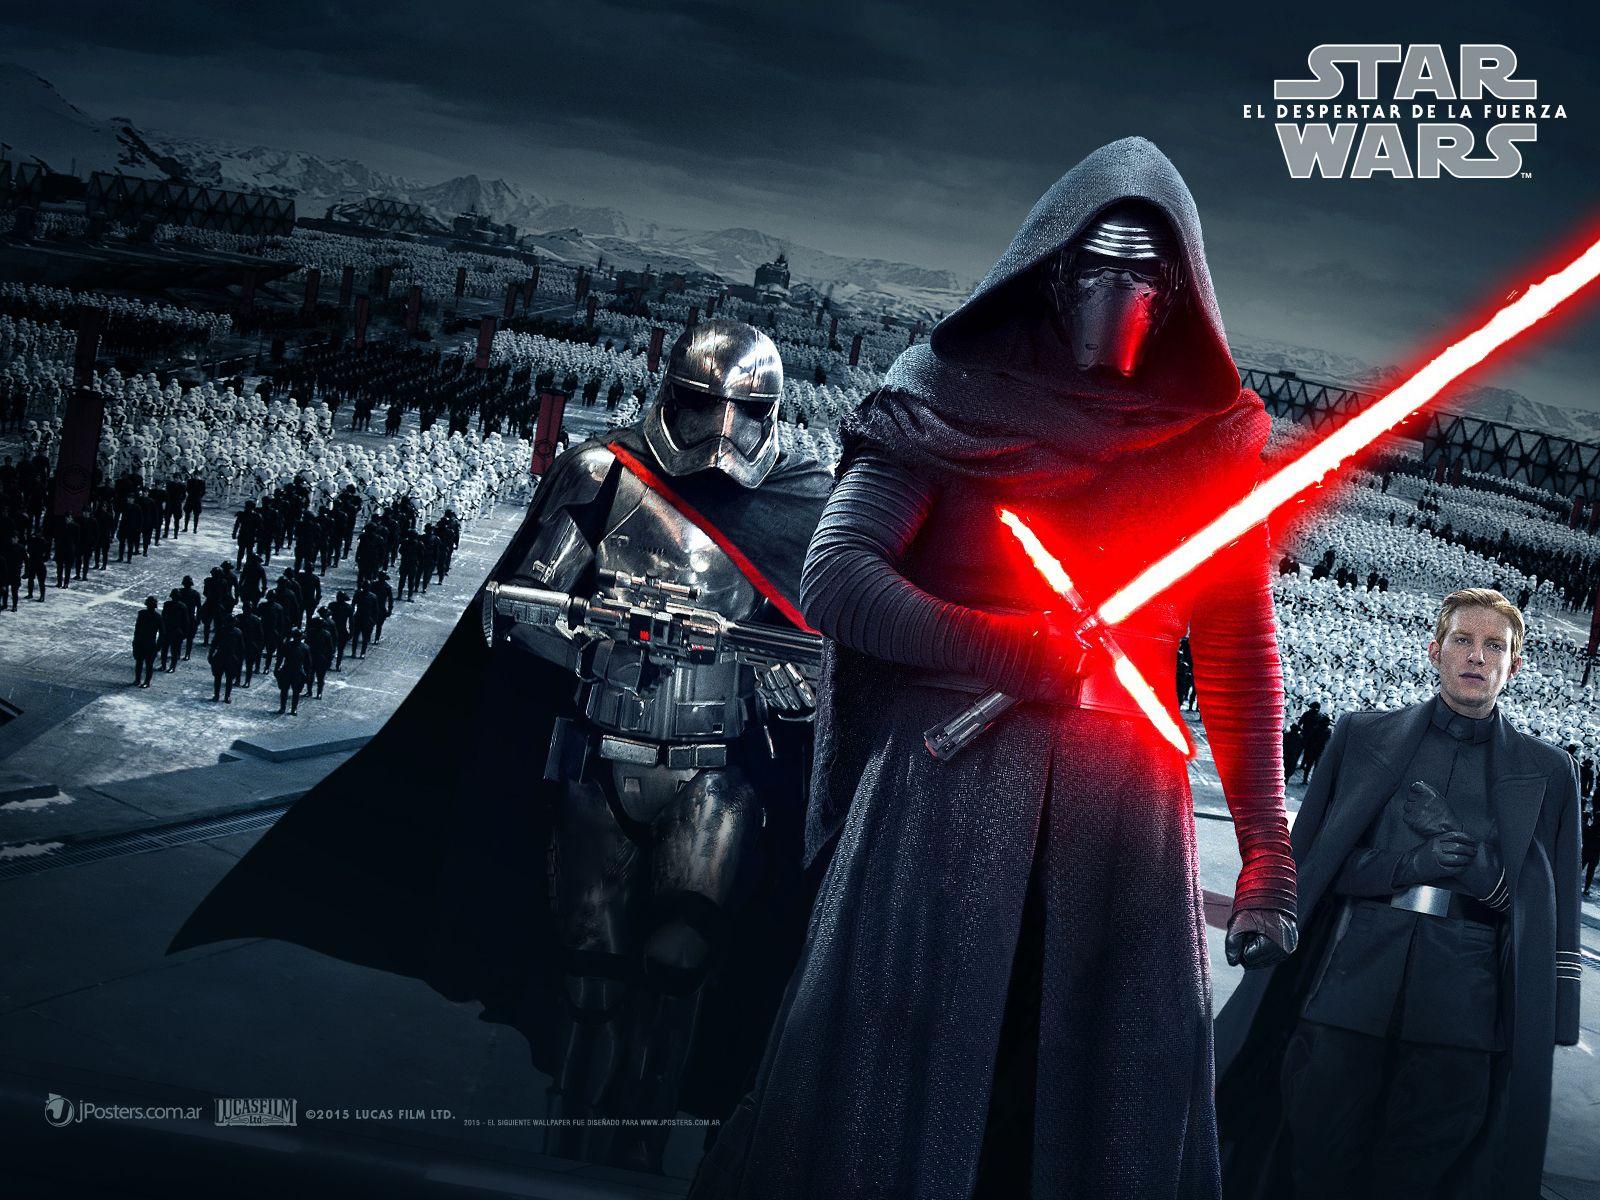 Star Wars Episode VII: The Force Awakens Wallpaper 3 X 1200